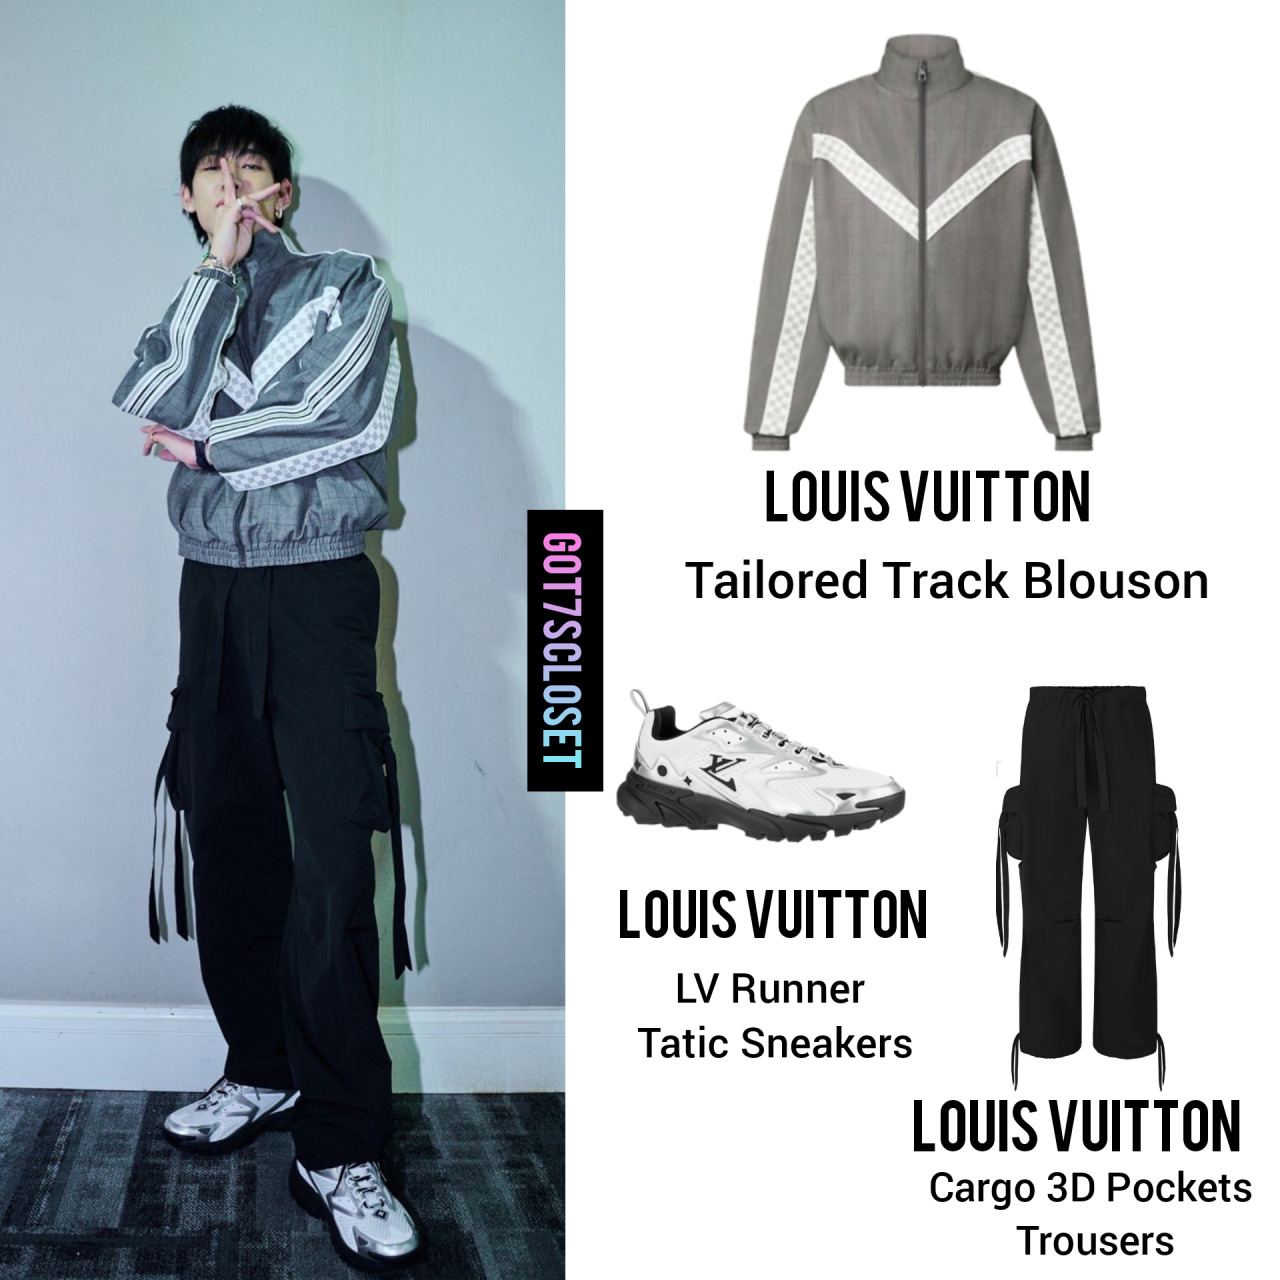 Louis Vuitton on X: The anticipation of departure. #LouisVuitton